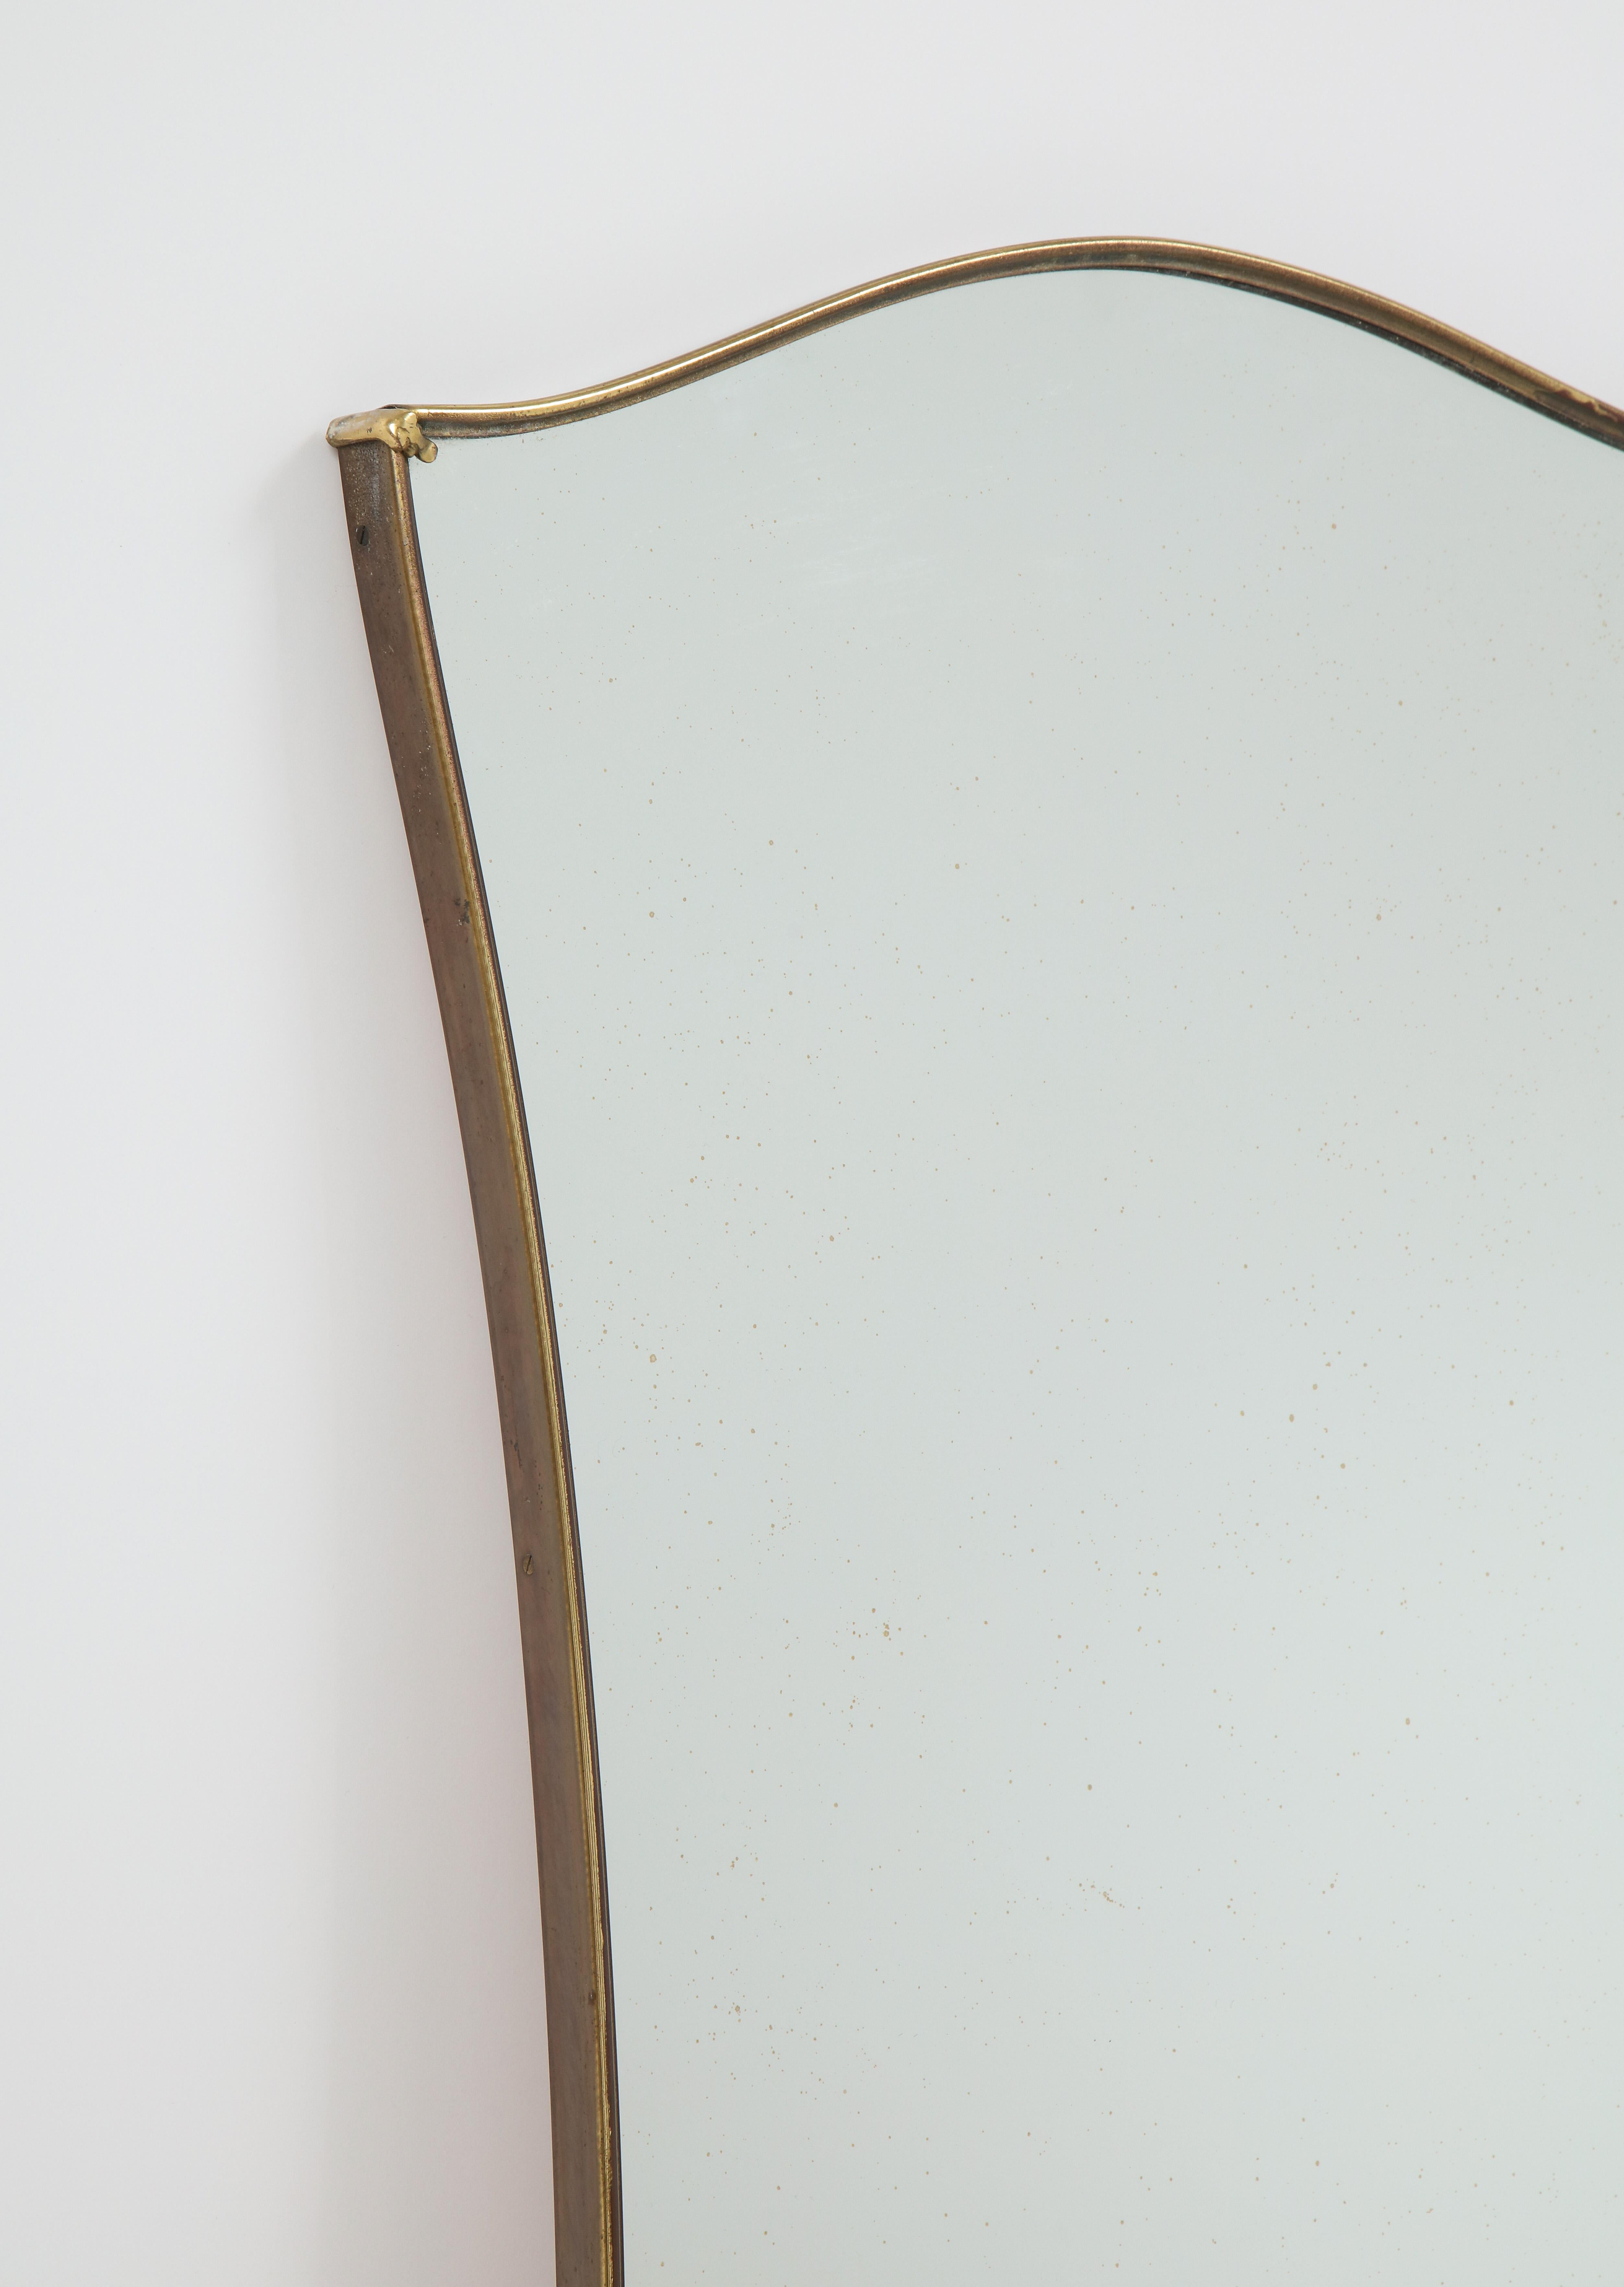 Italian Gio Ponti Style Shaped Brass Mirror with Original Glass